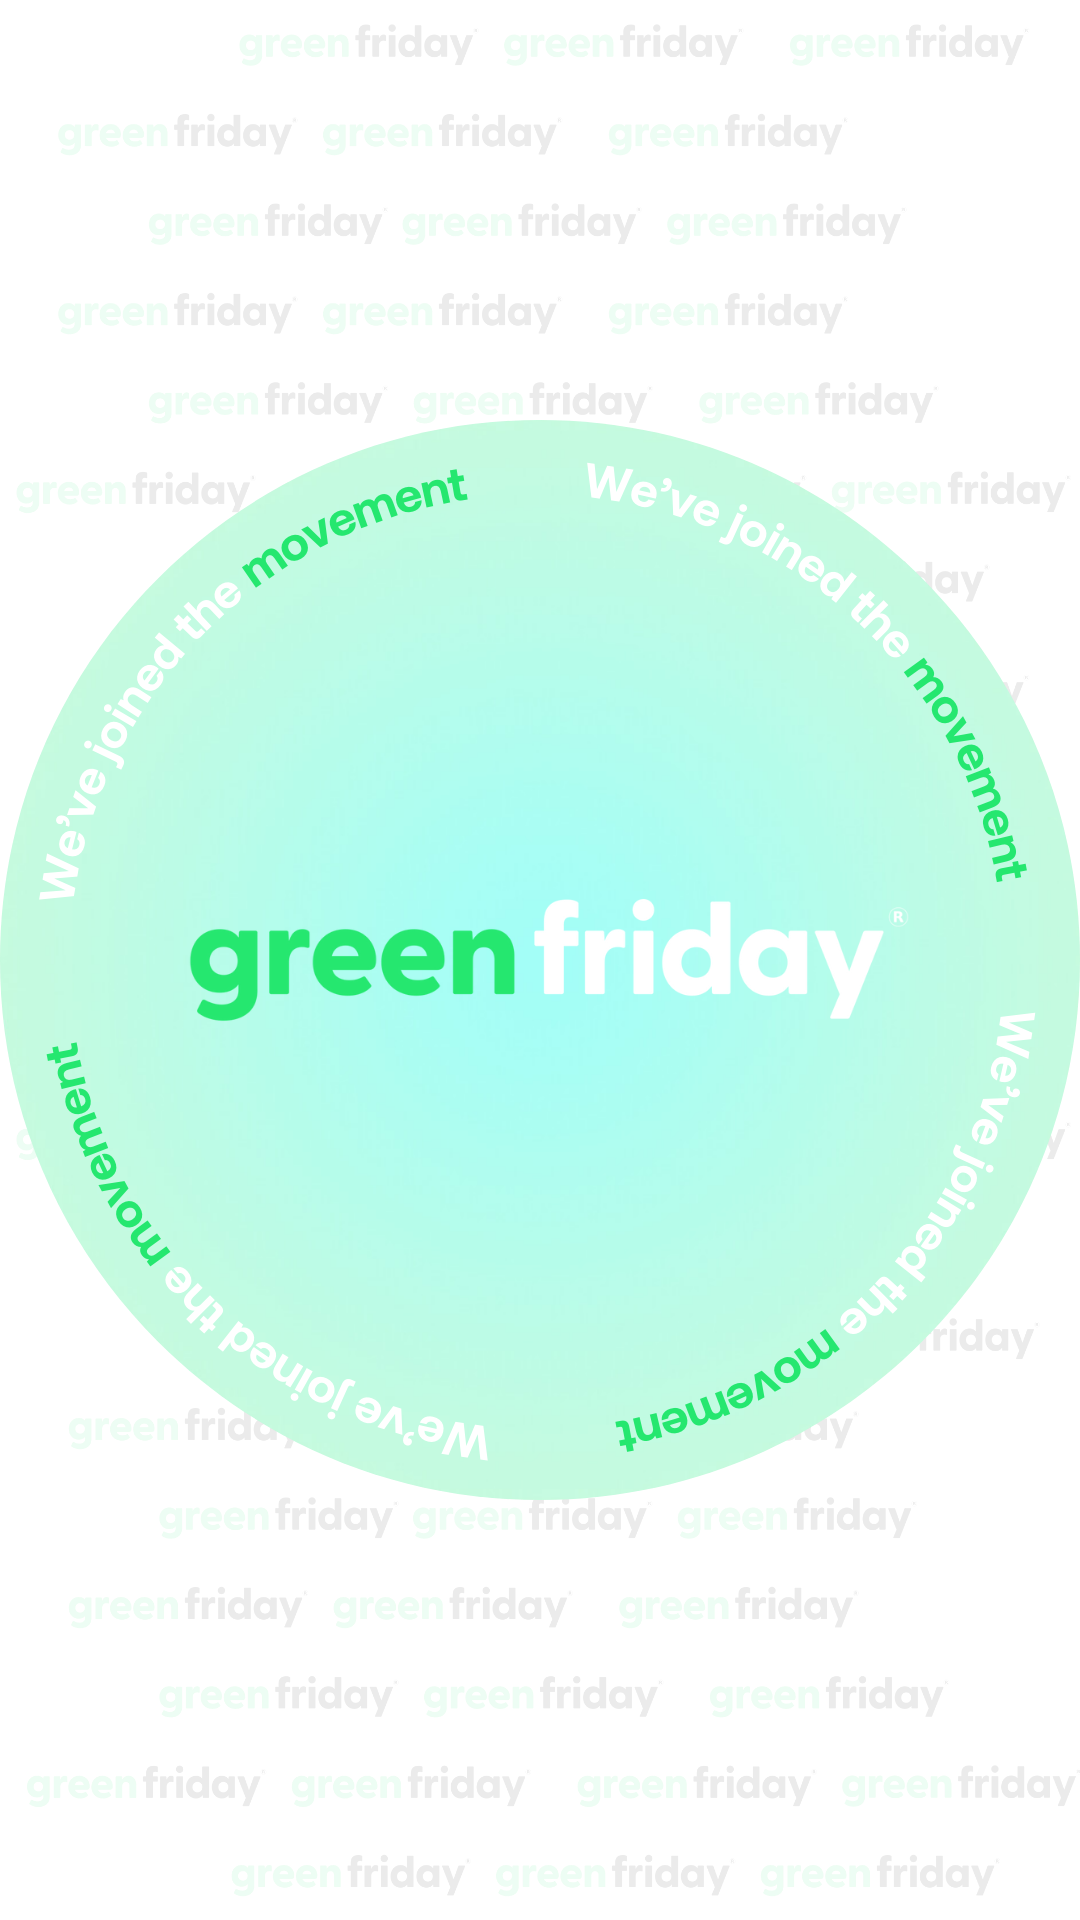 Green Friday - encouraging sustainable shopping habits